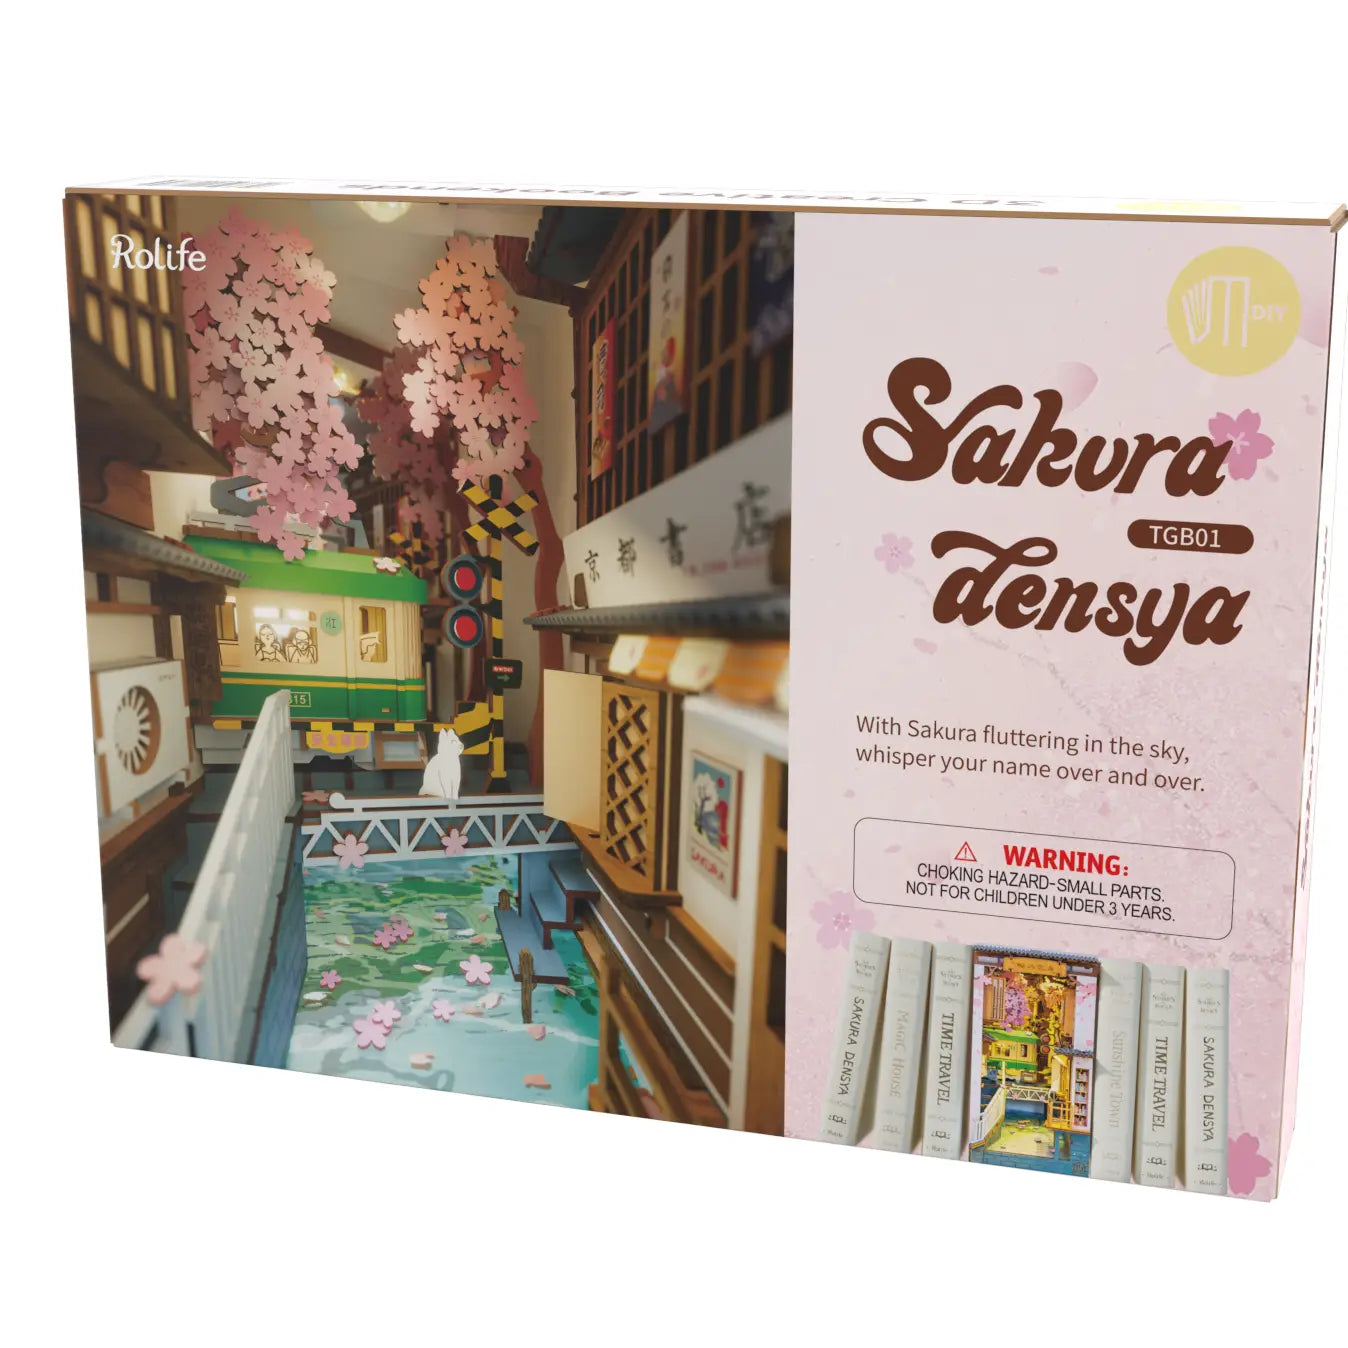 A blind box kit for adults - Sakura Tram book nook. Features a miniature train scene. Dimensions: 9.4 x 3.9 x 7.4 in (23.9 x 9.9 x 18.8 cm).